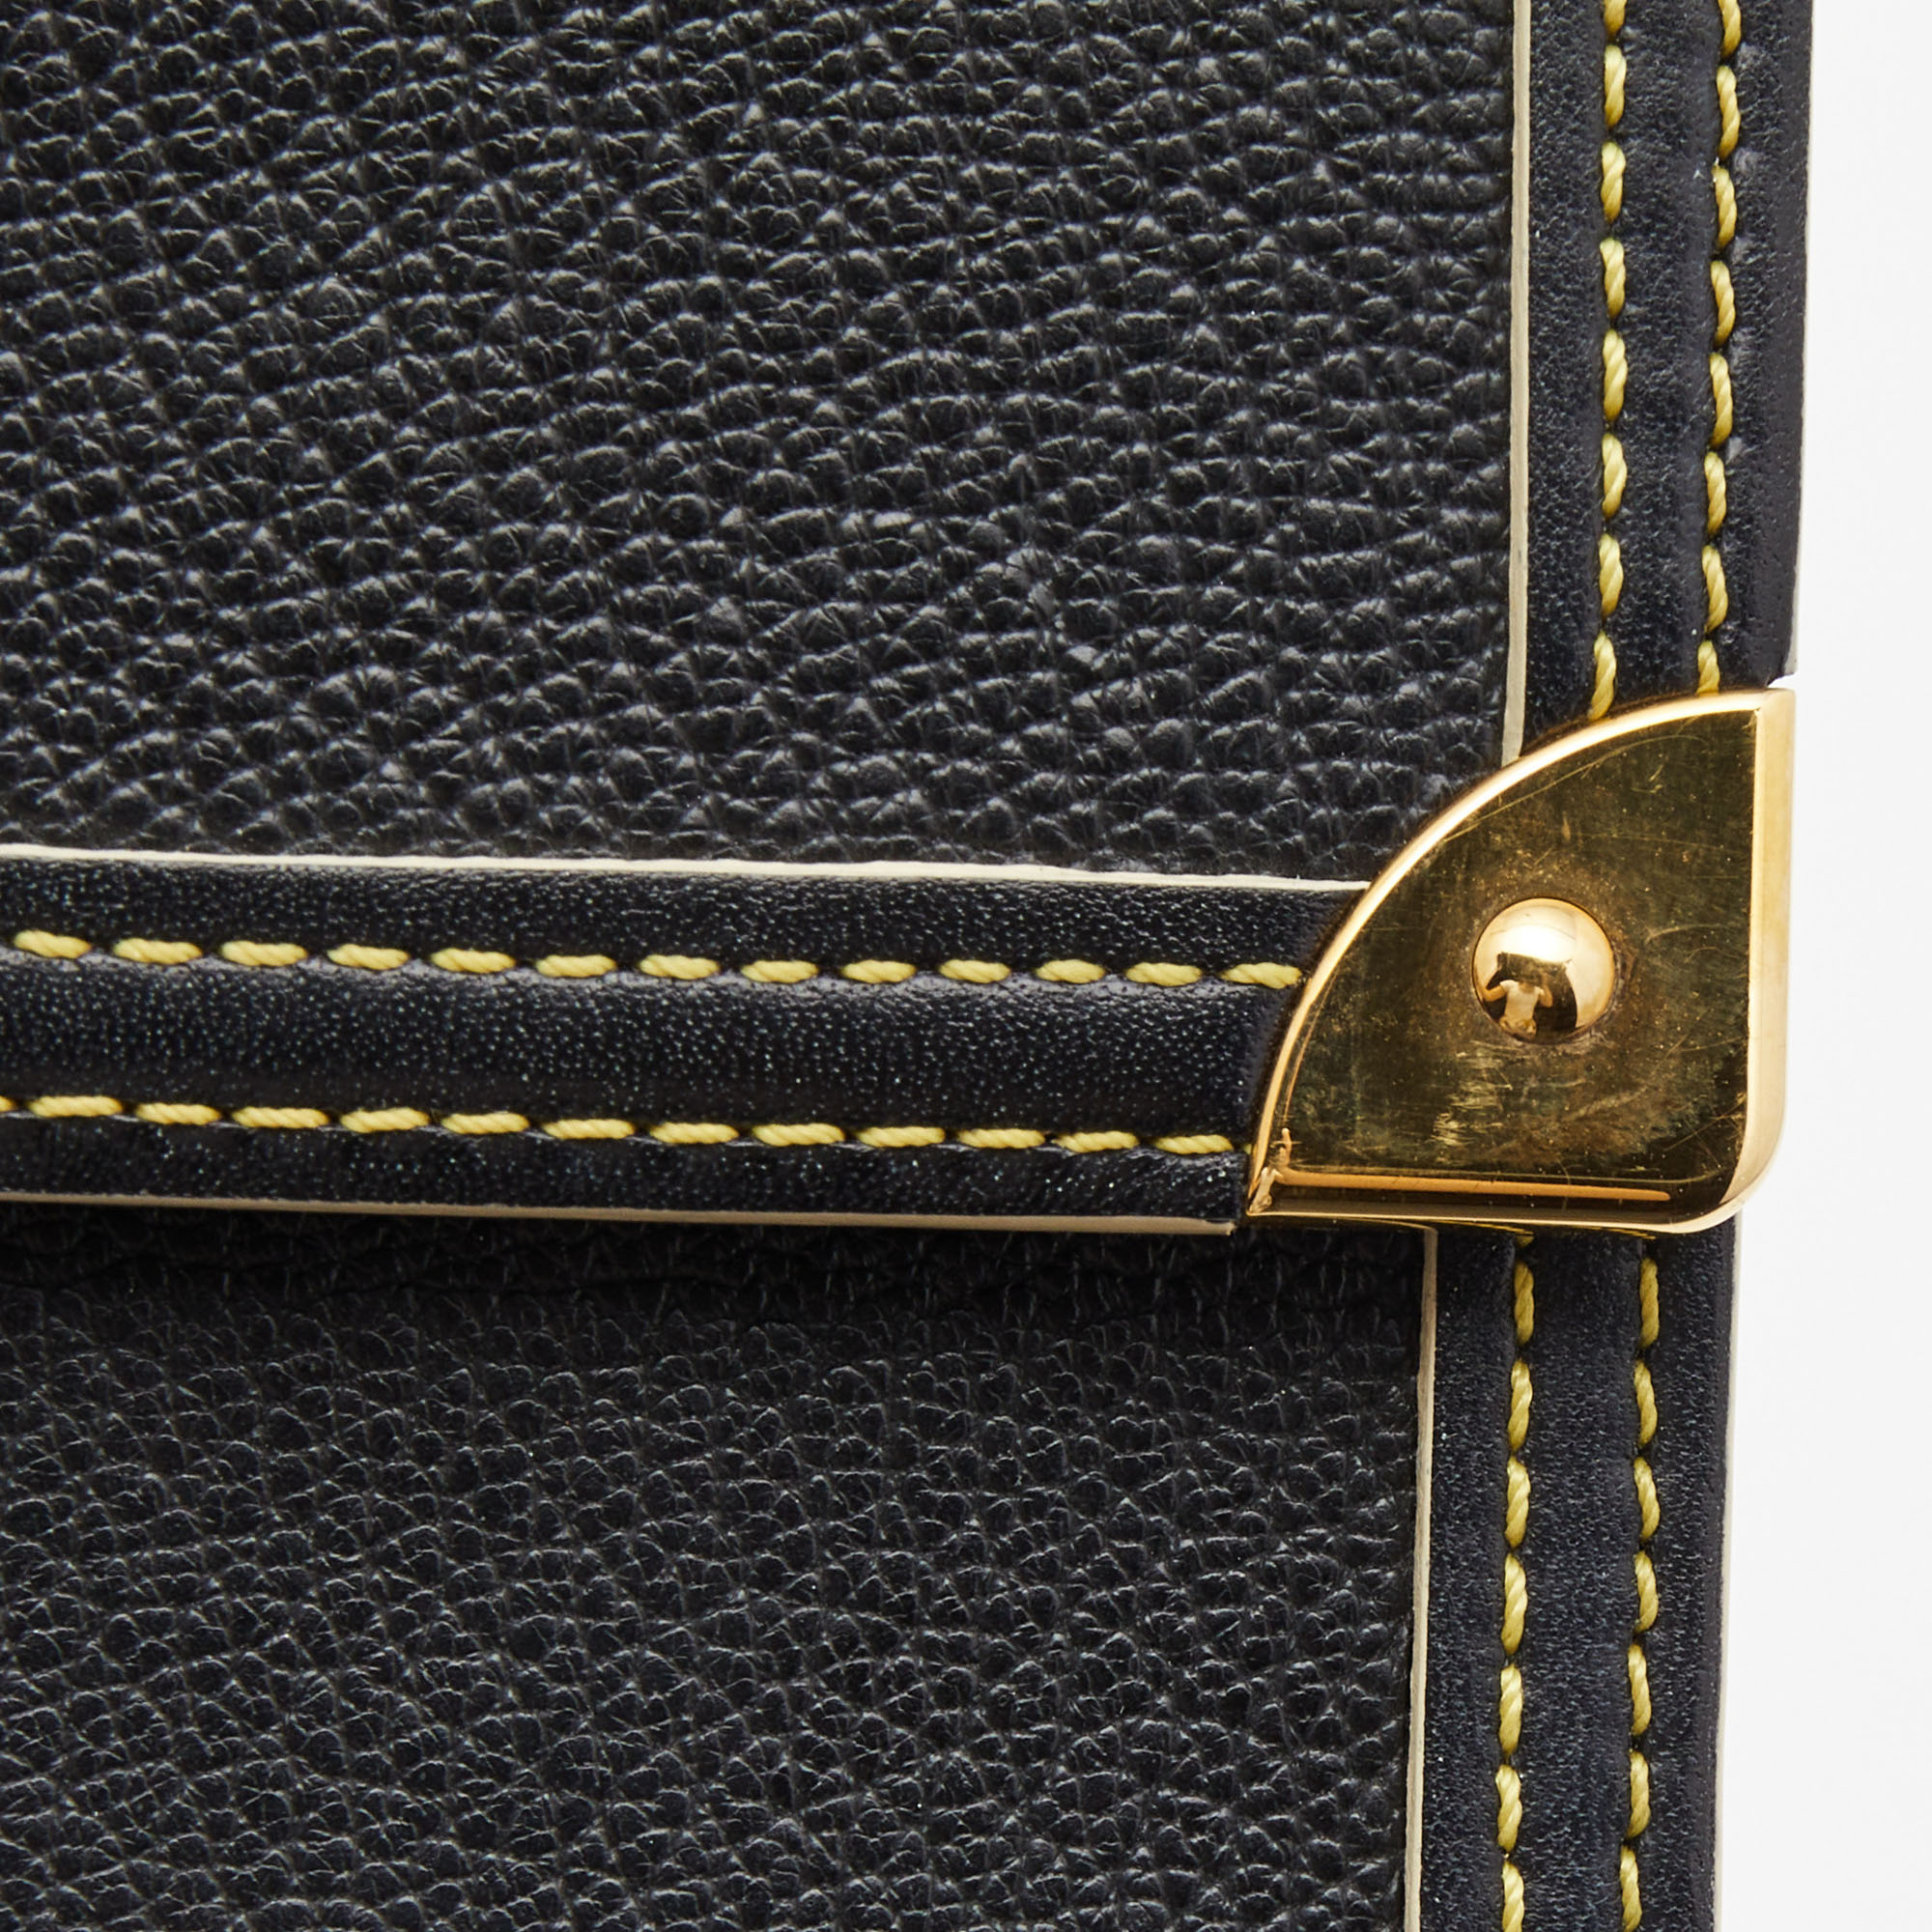 Louis Vuitton Black Leather Porte Tresor International Wallet